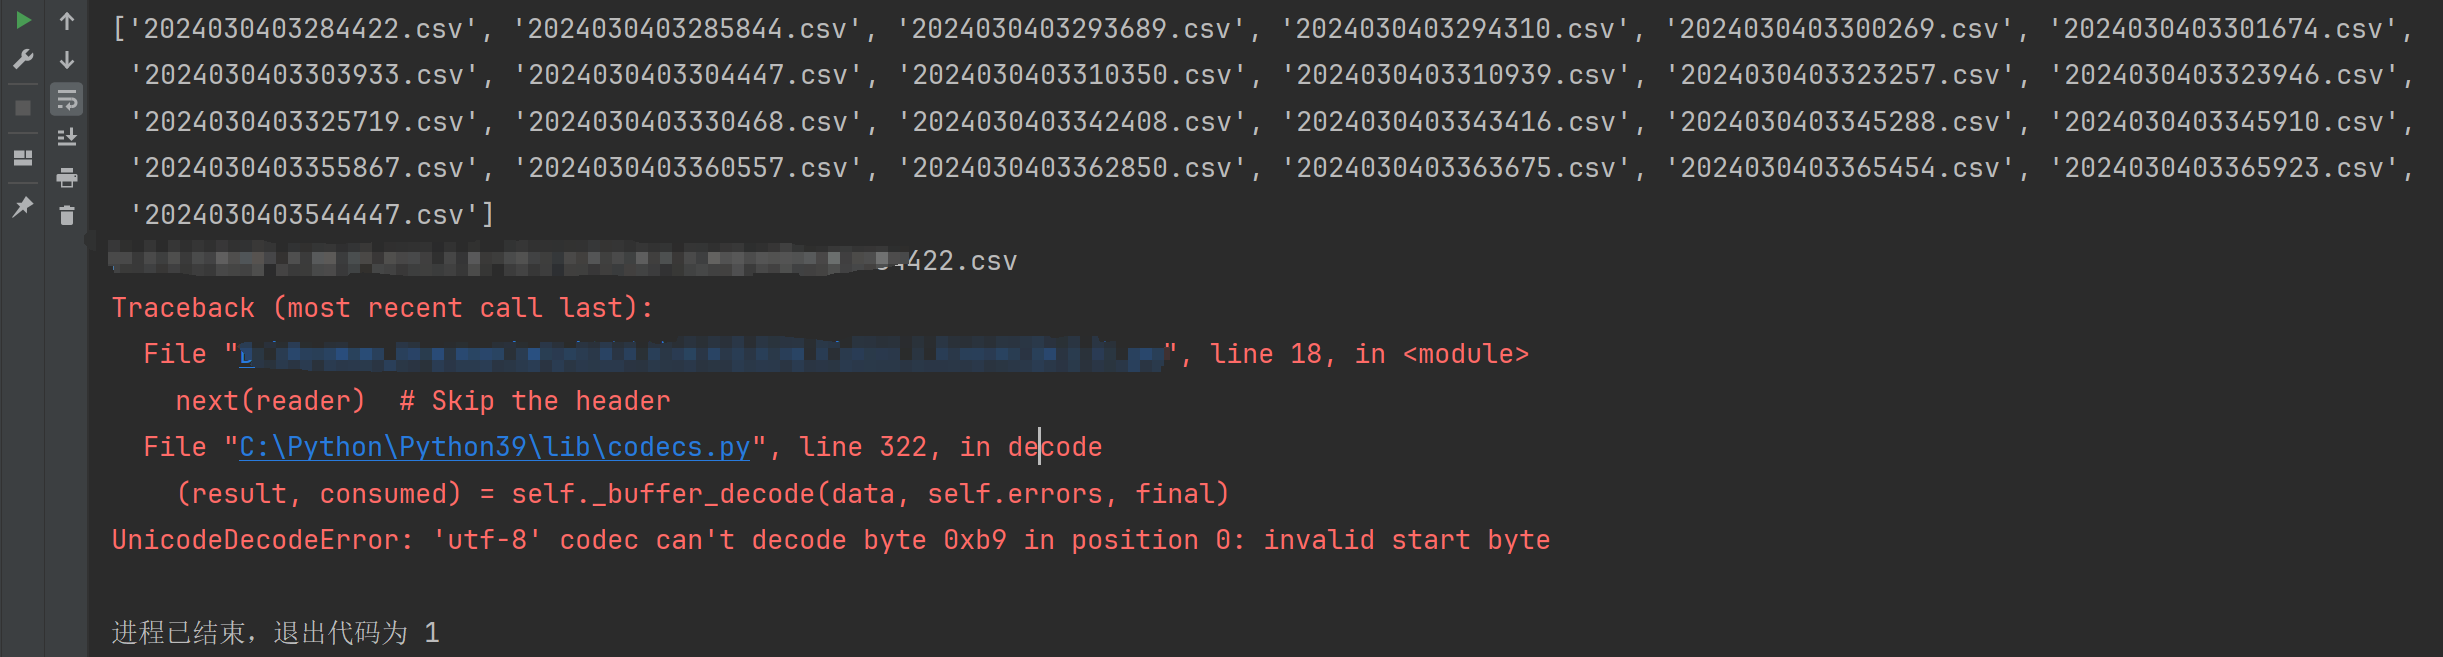 UnicodeDecodeError: 'utf-8' codec can't decode byte 0xb9 in position 0: invalid start byte错误解决 1